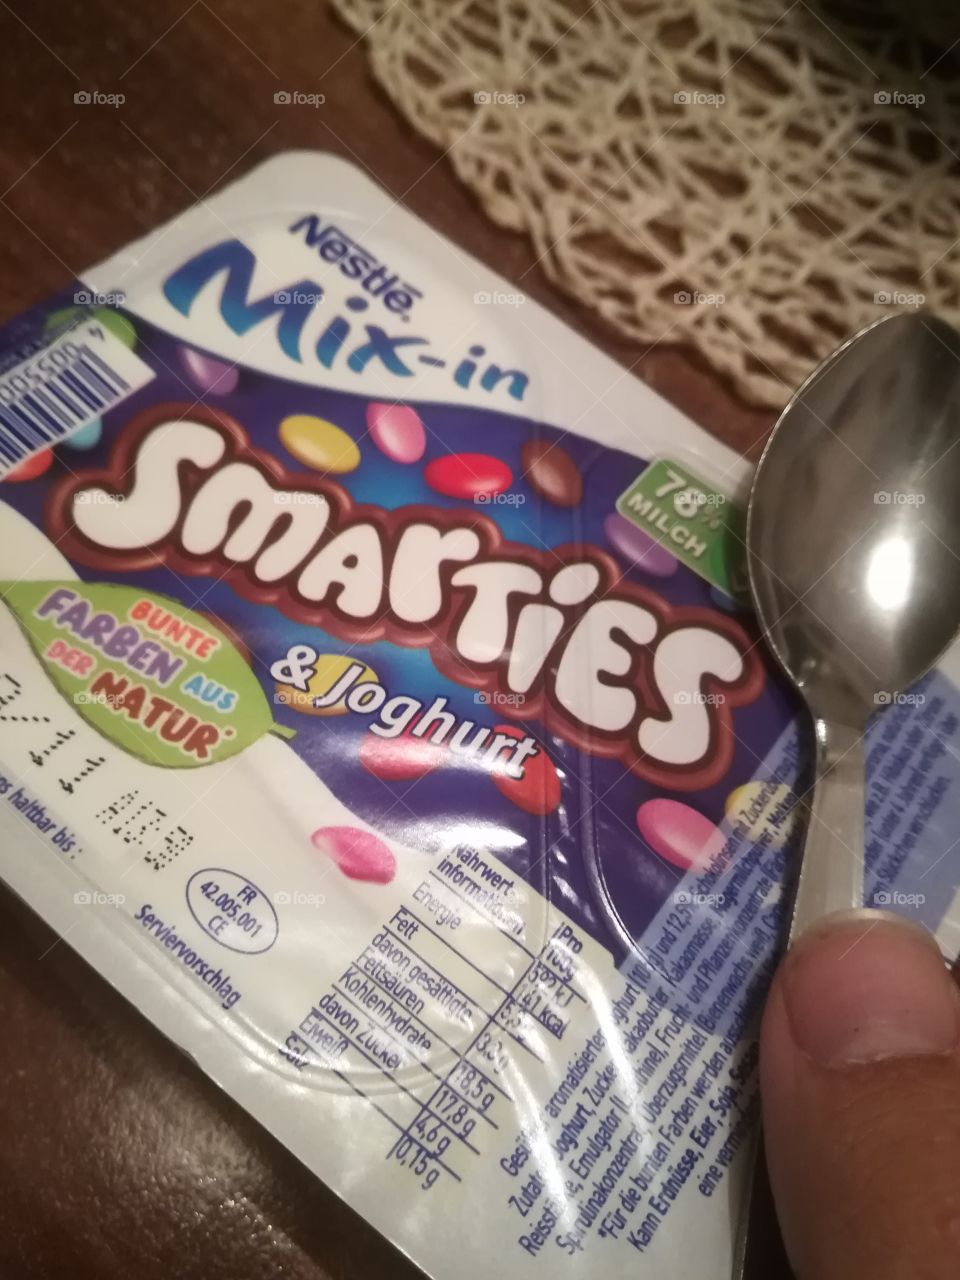 Nestlé smarties mix-in